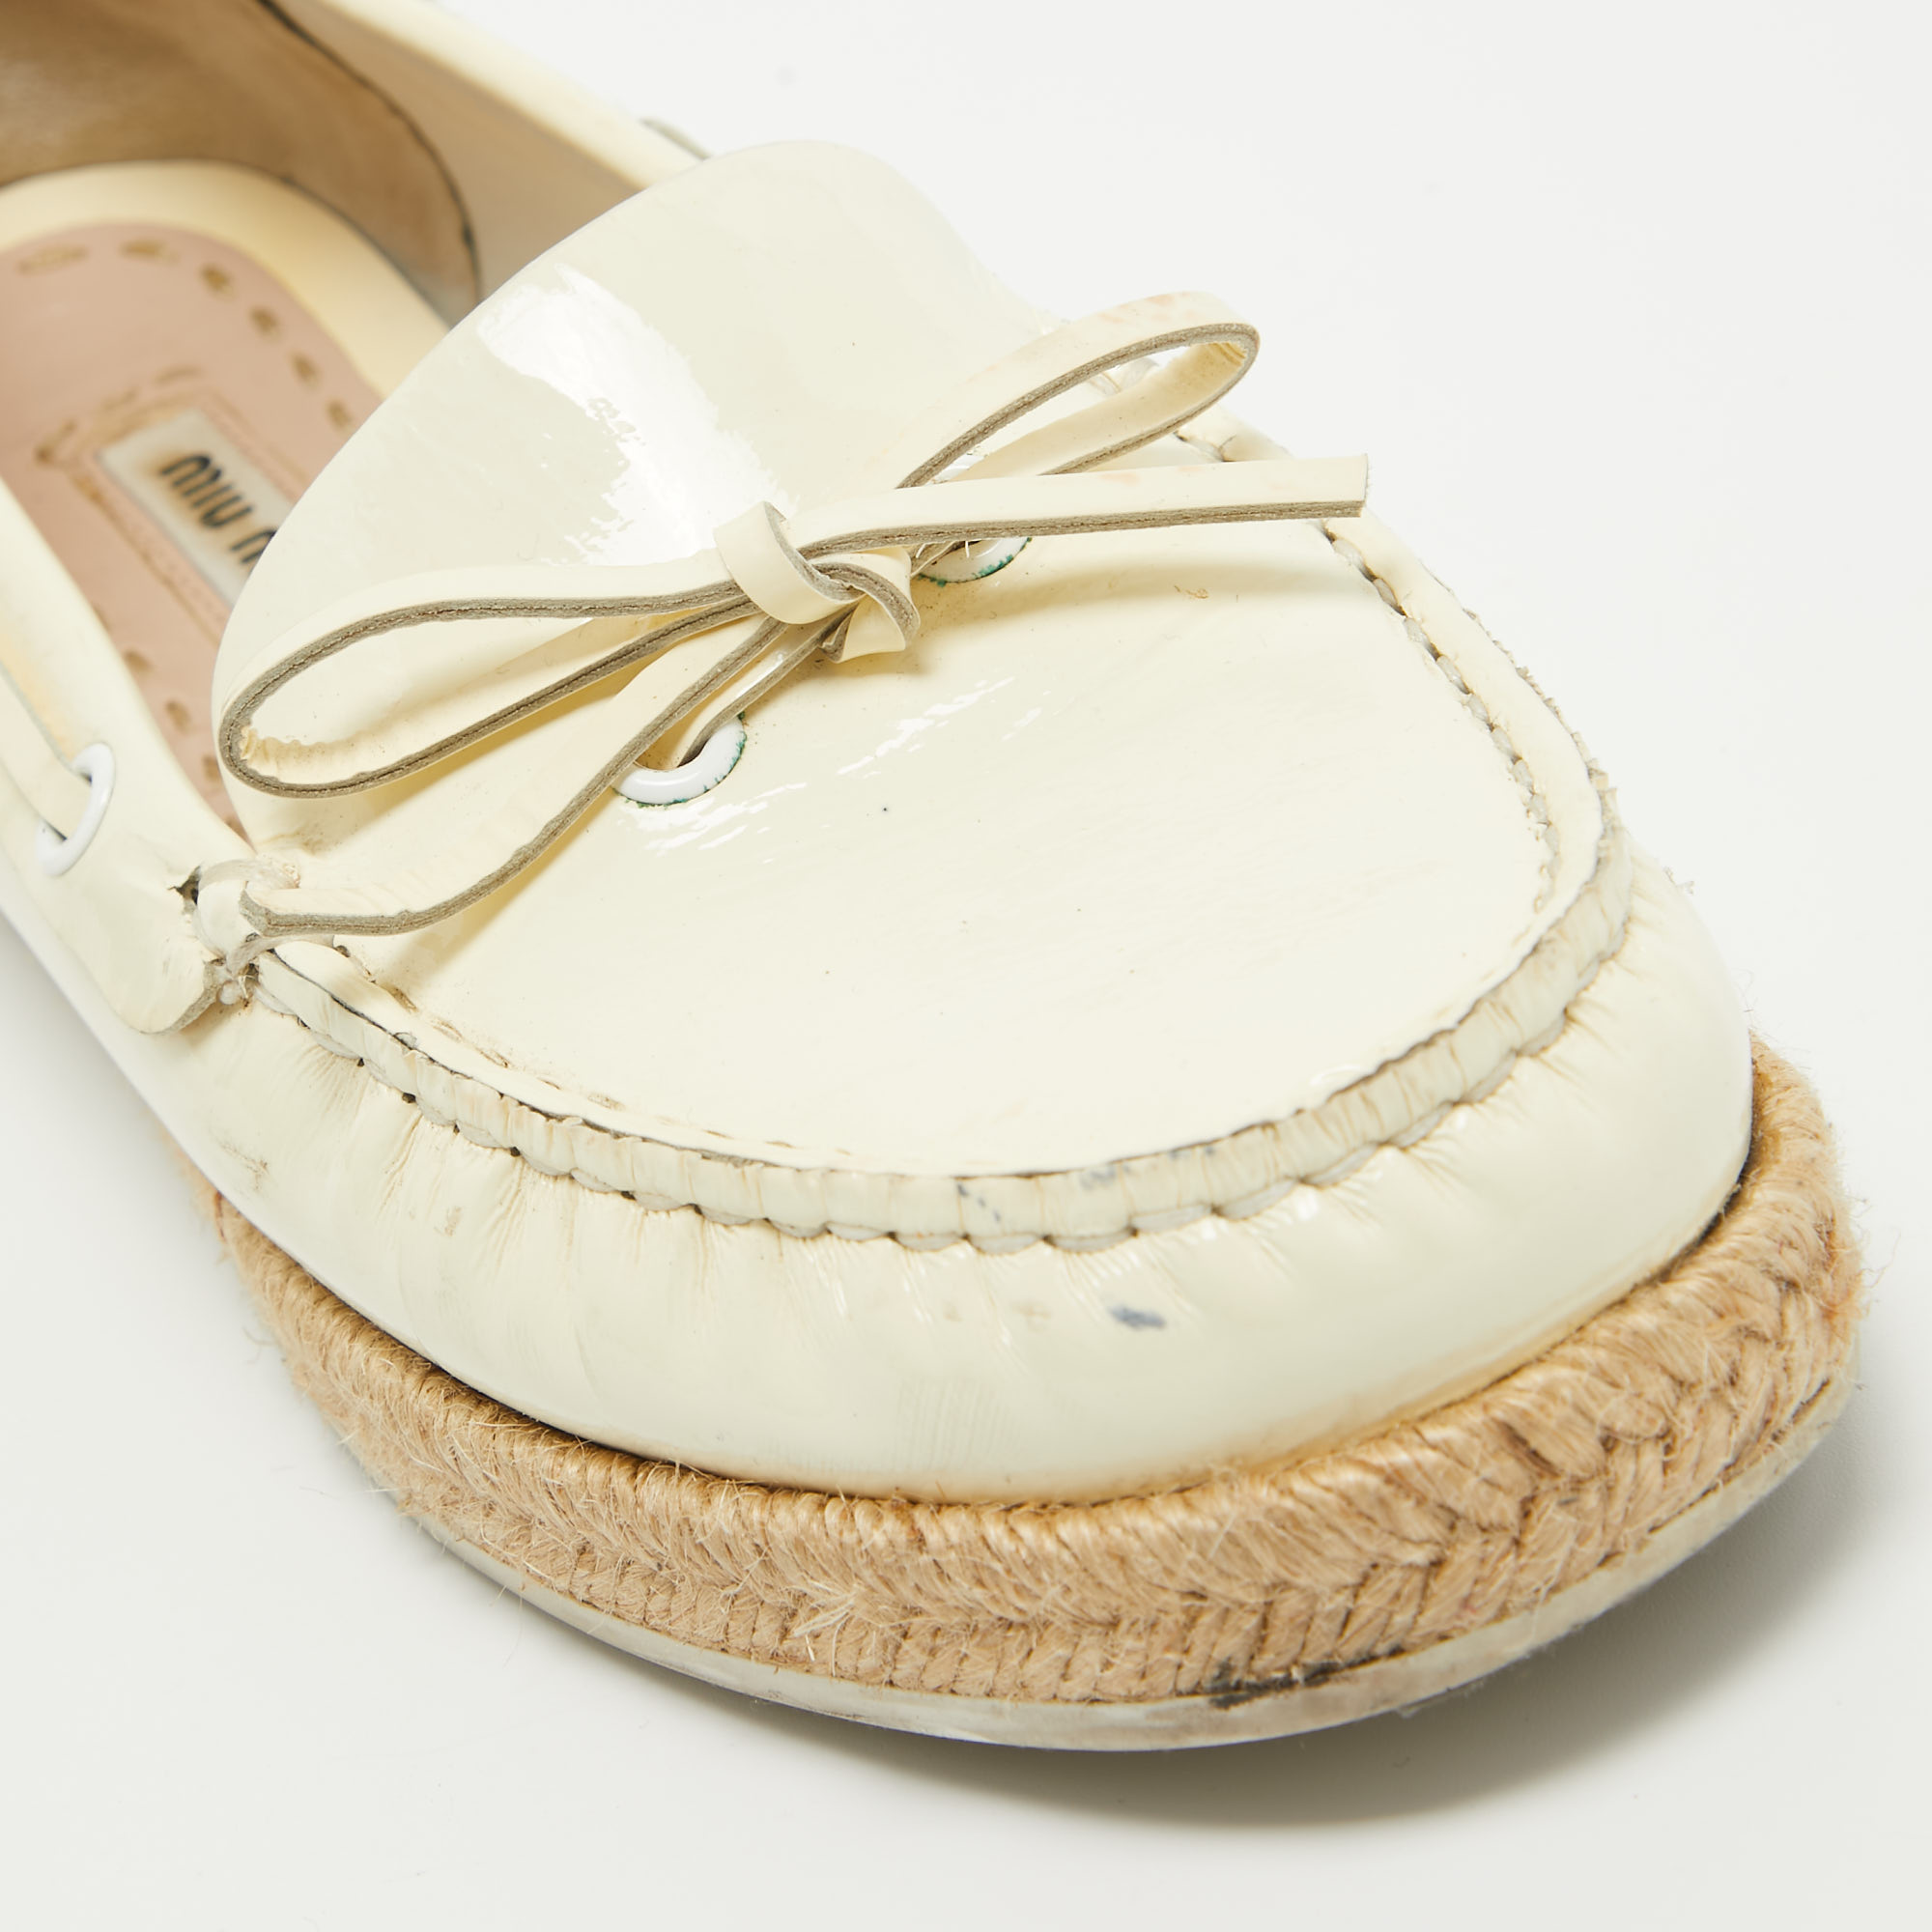 Miu Miu Cream Patent Leather Bow Espadrille Loafers Size 35.5